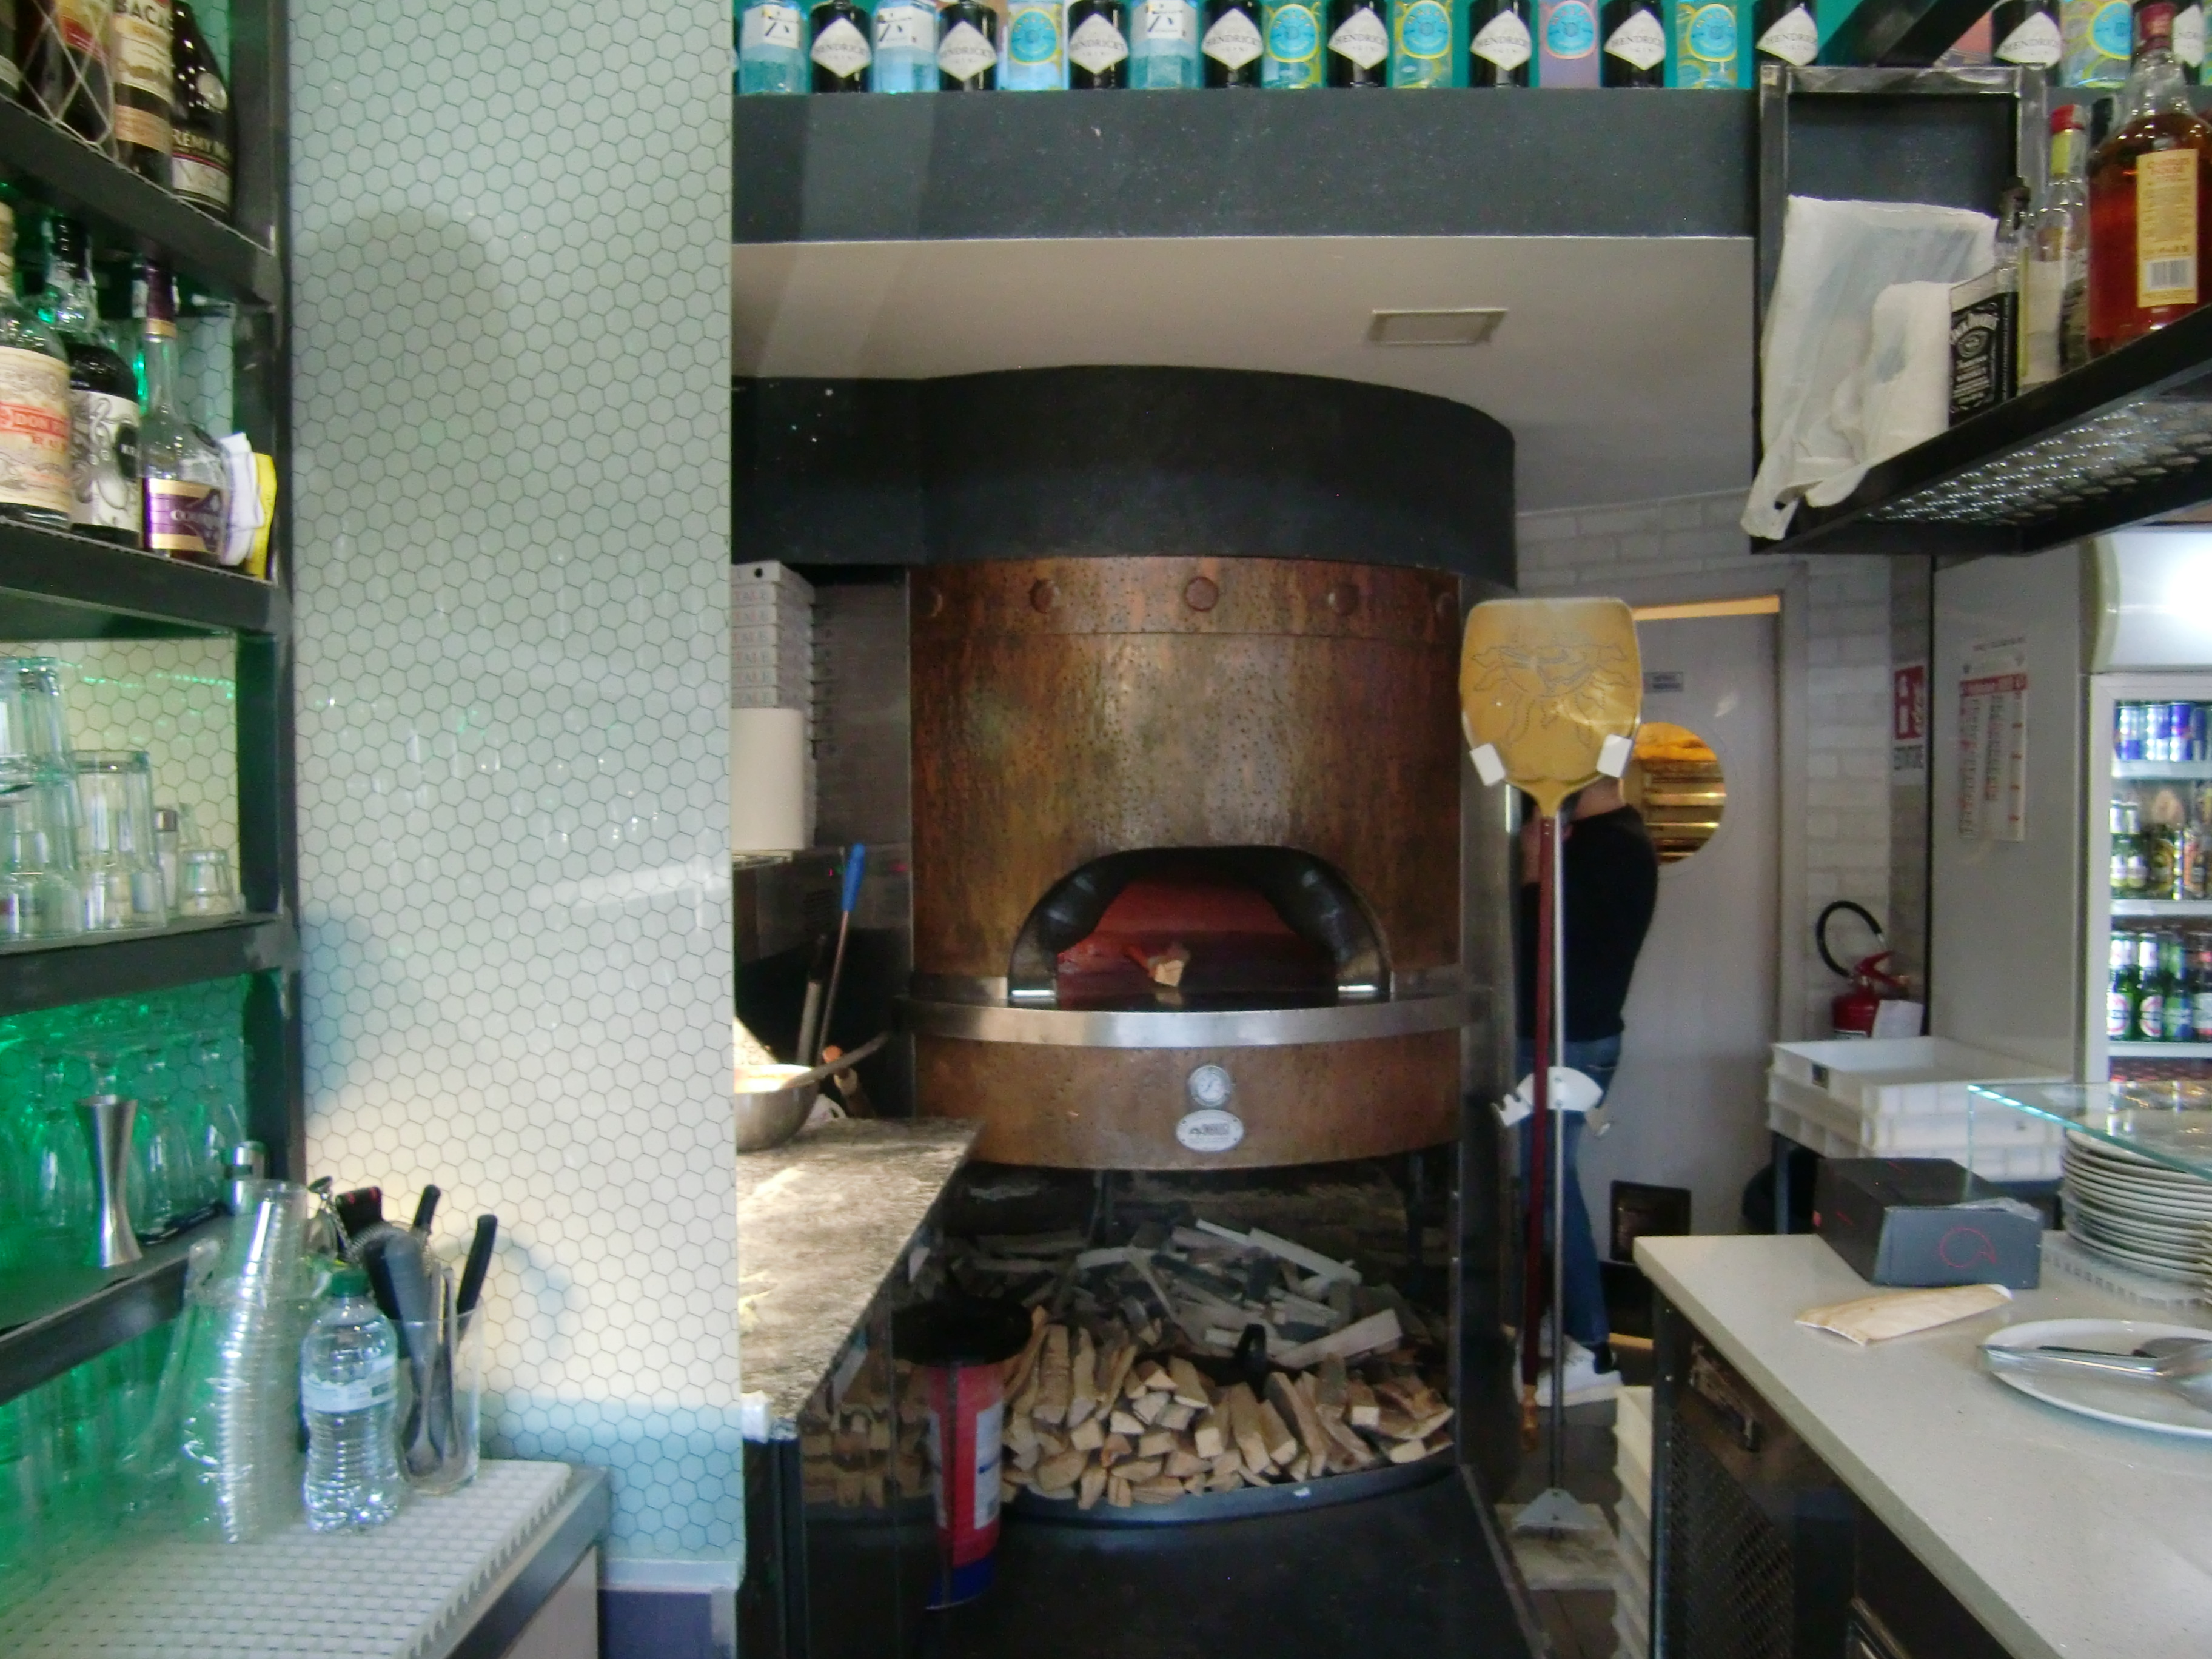 Pizzeria Pub San donato Milanese